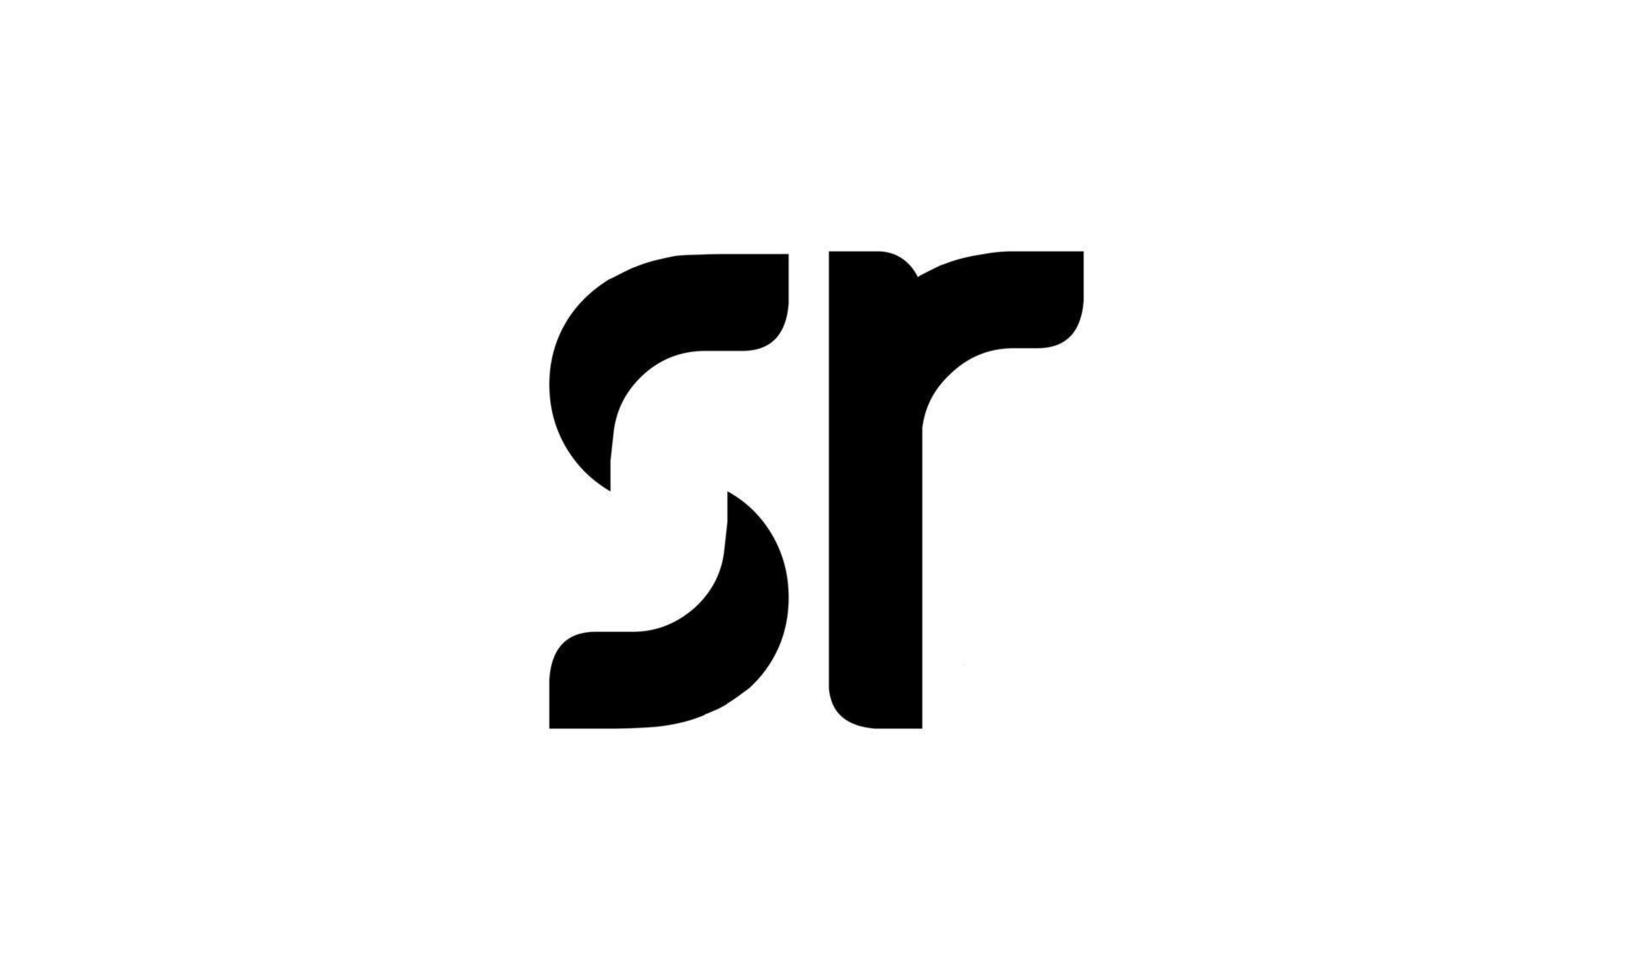 SP logo design. Initial SP letter logo design monogram vector design pro vector.